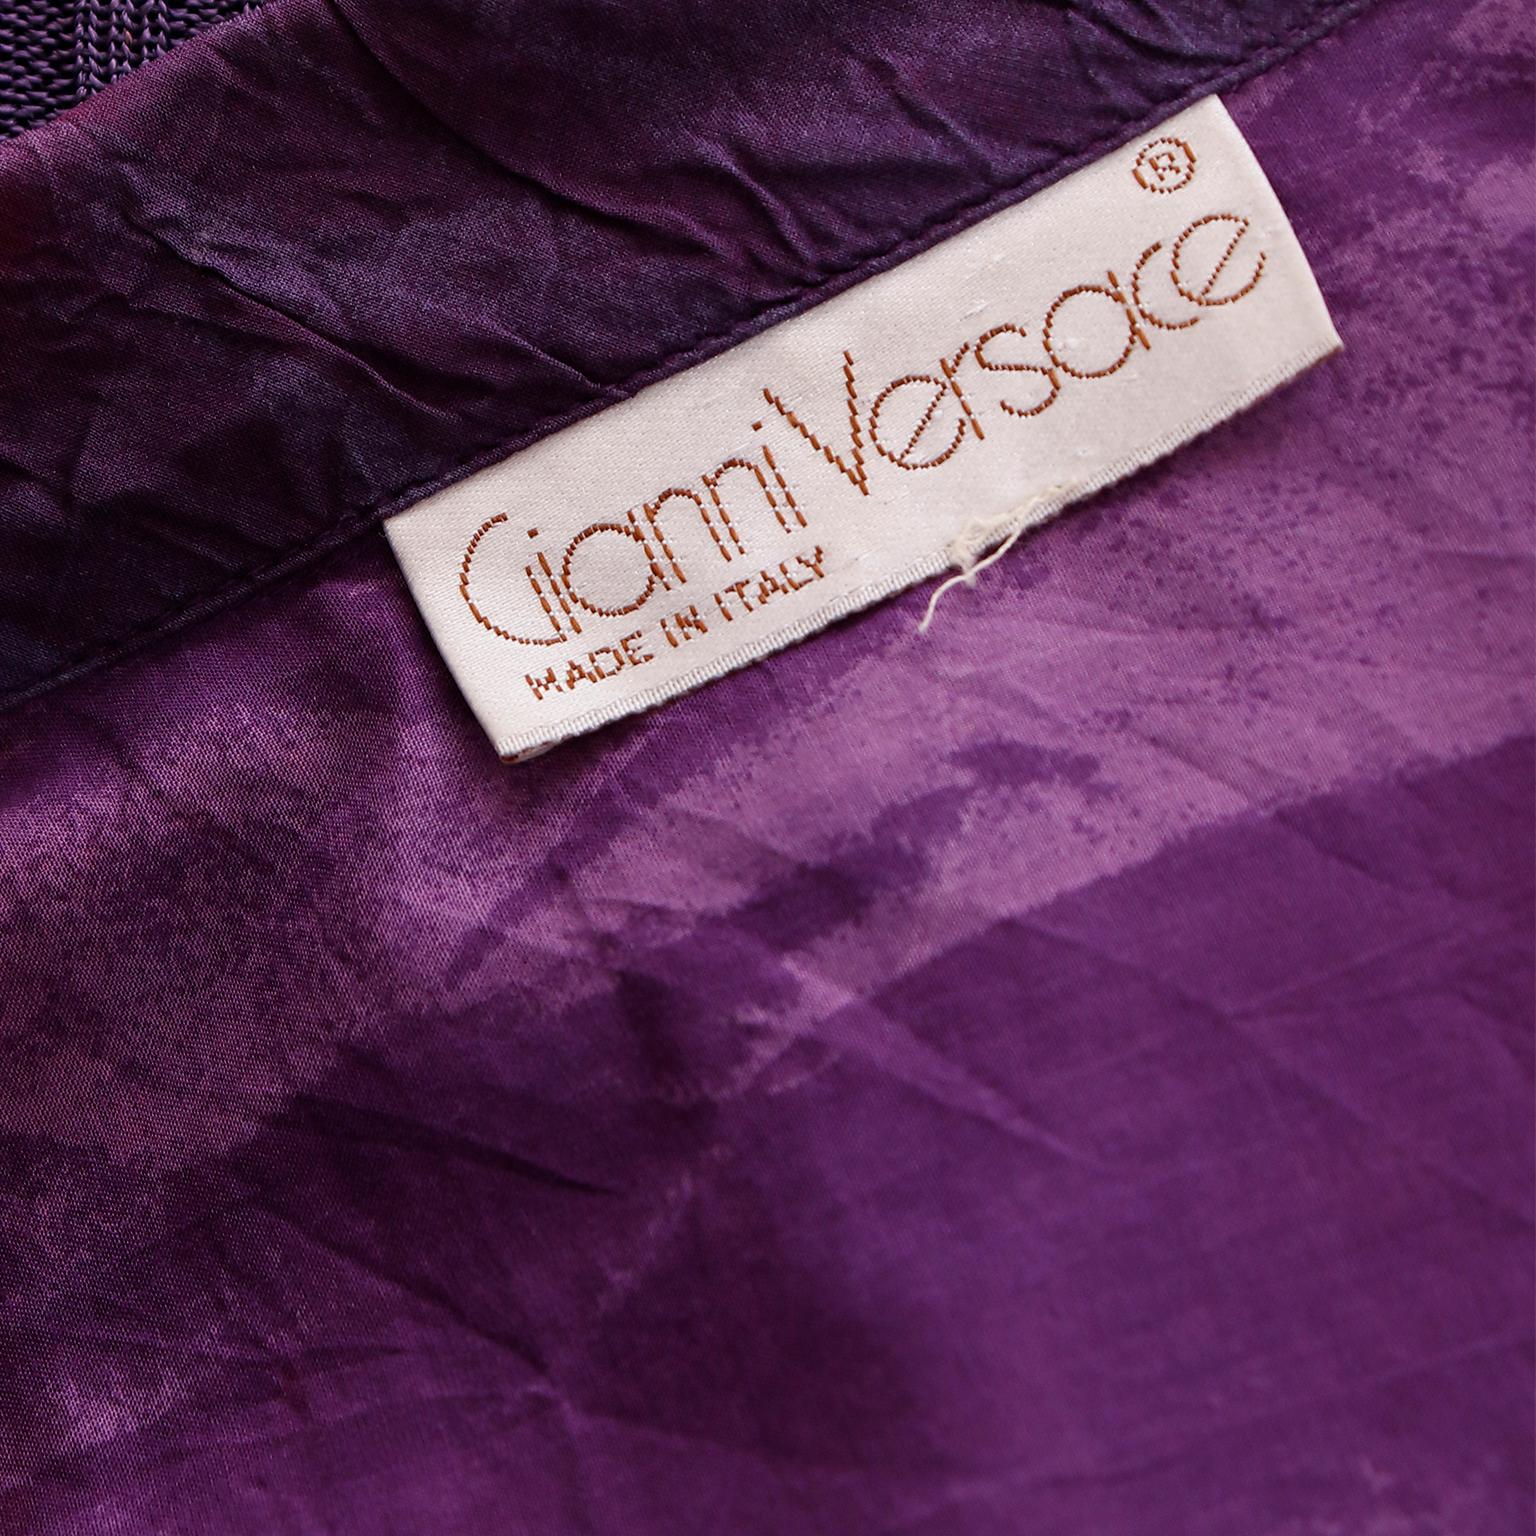 Gianni Versace 1980s Asymmetrical Top Purple Abstract Print Shirt w Knit Trim For Sale 5